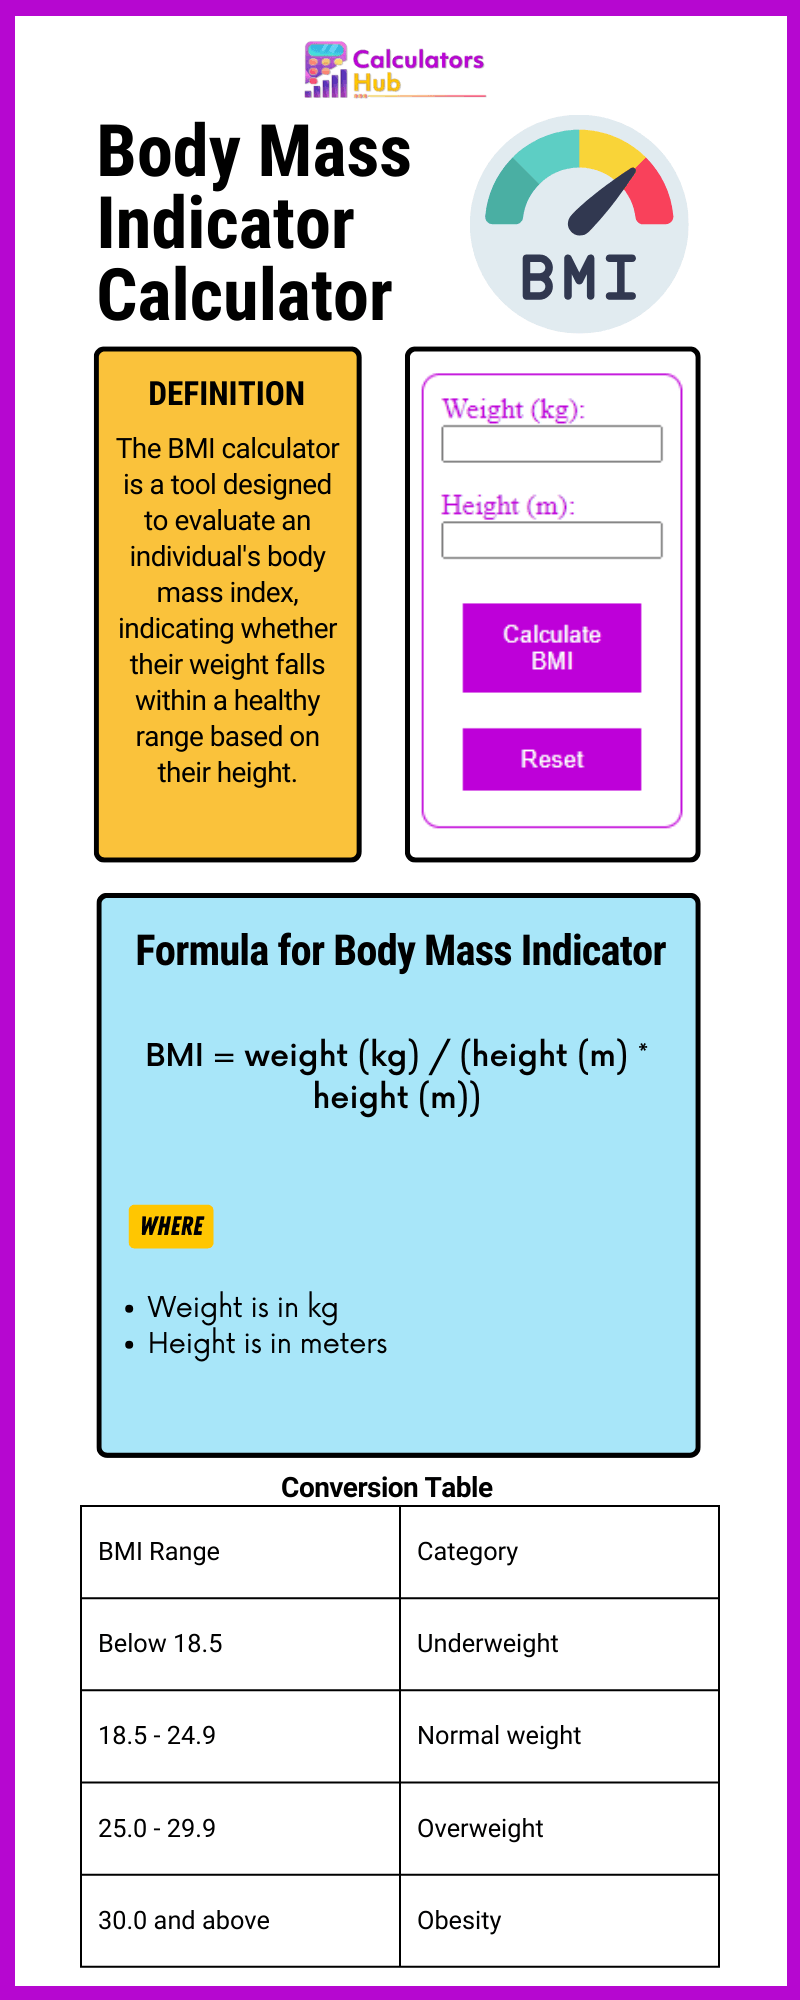 Body Mass Indicator Calculator